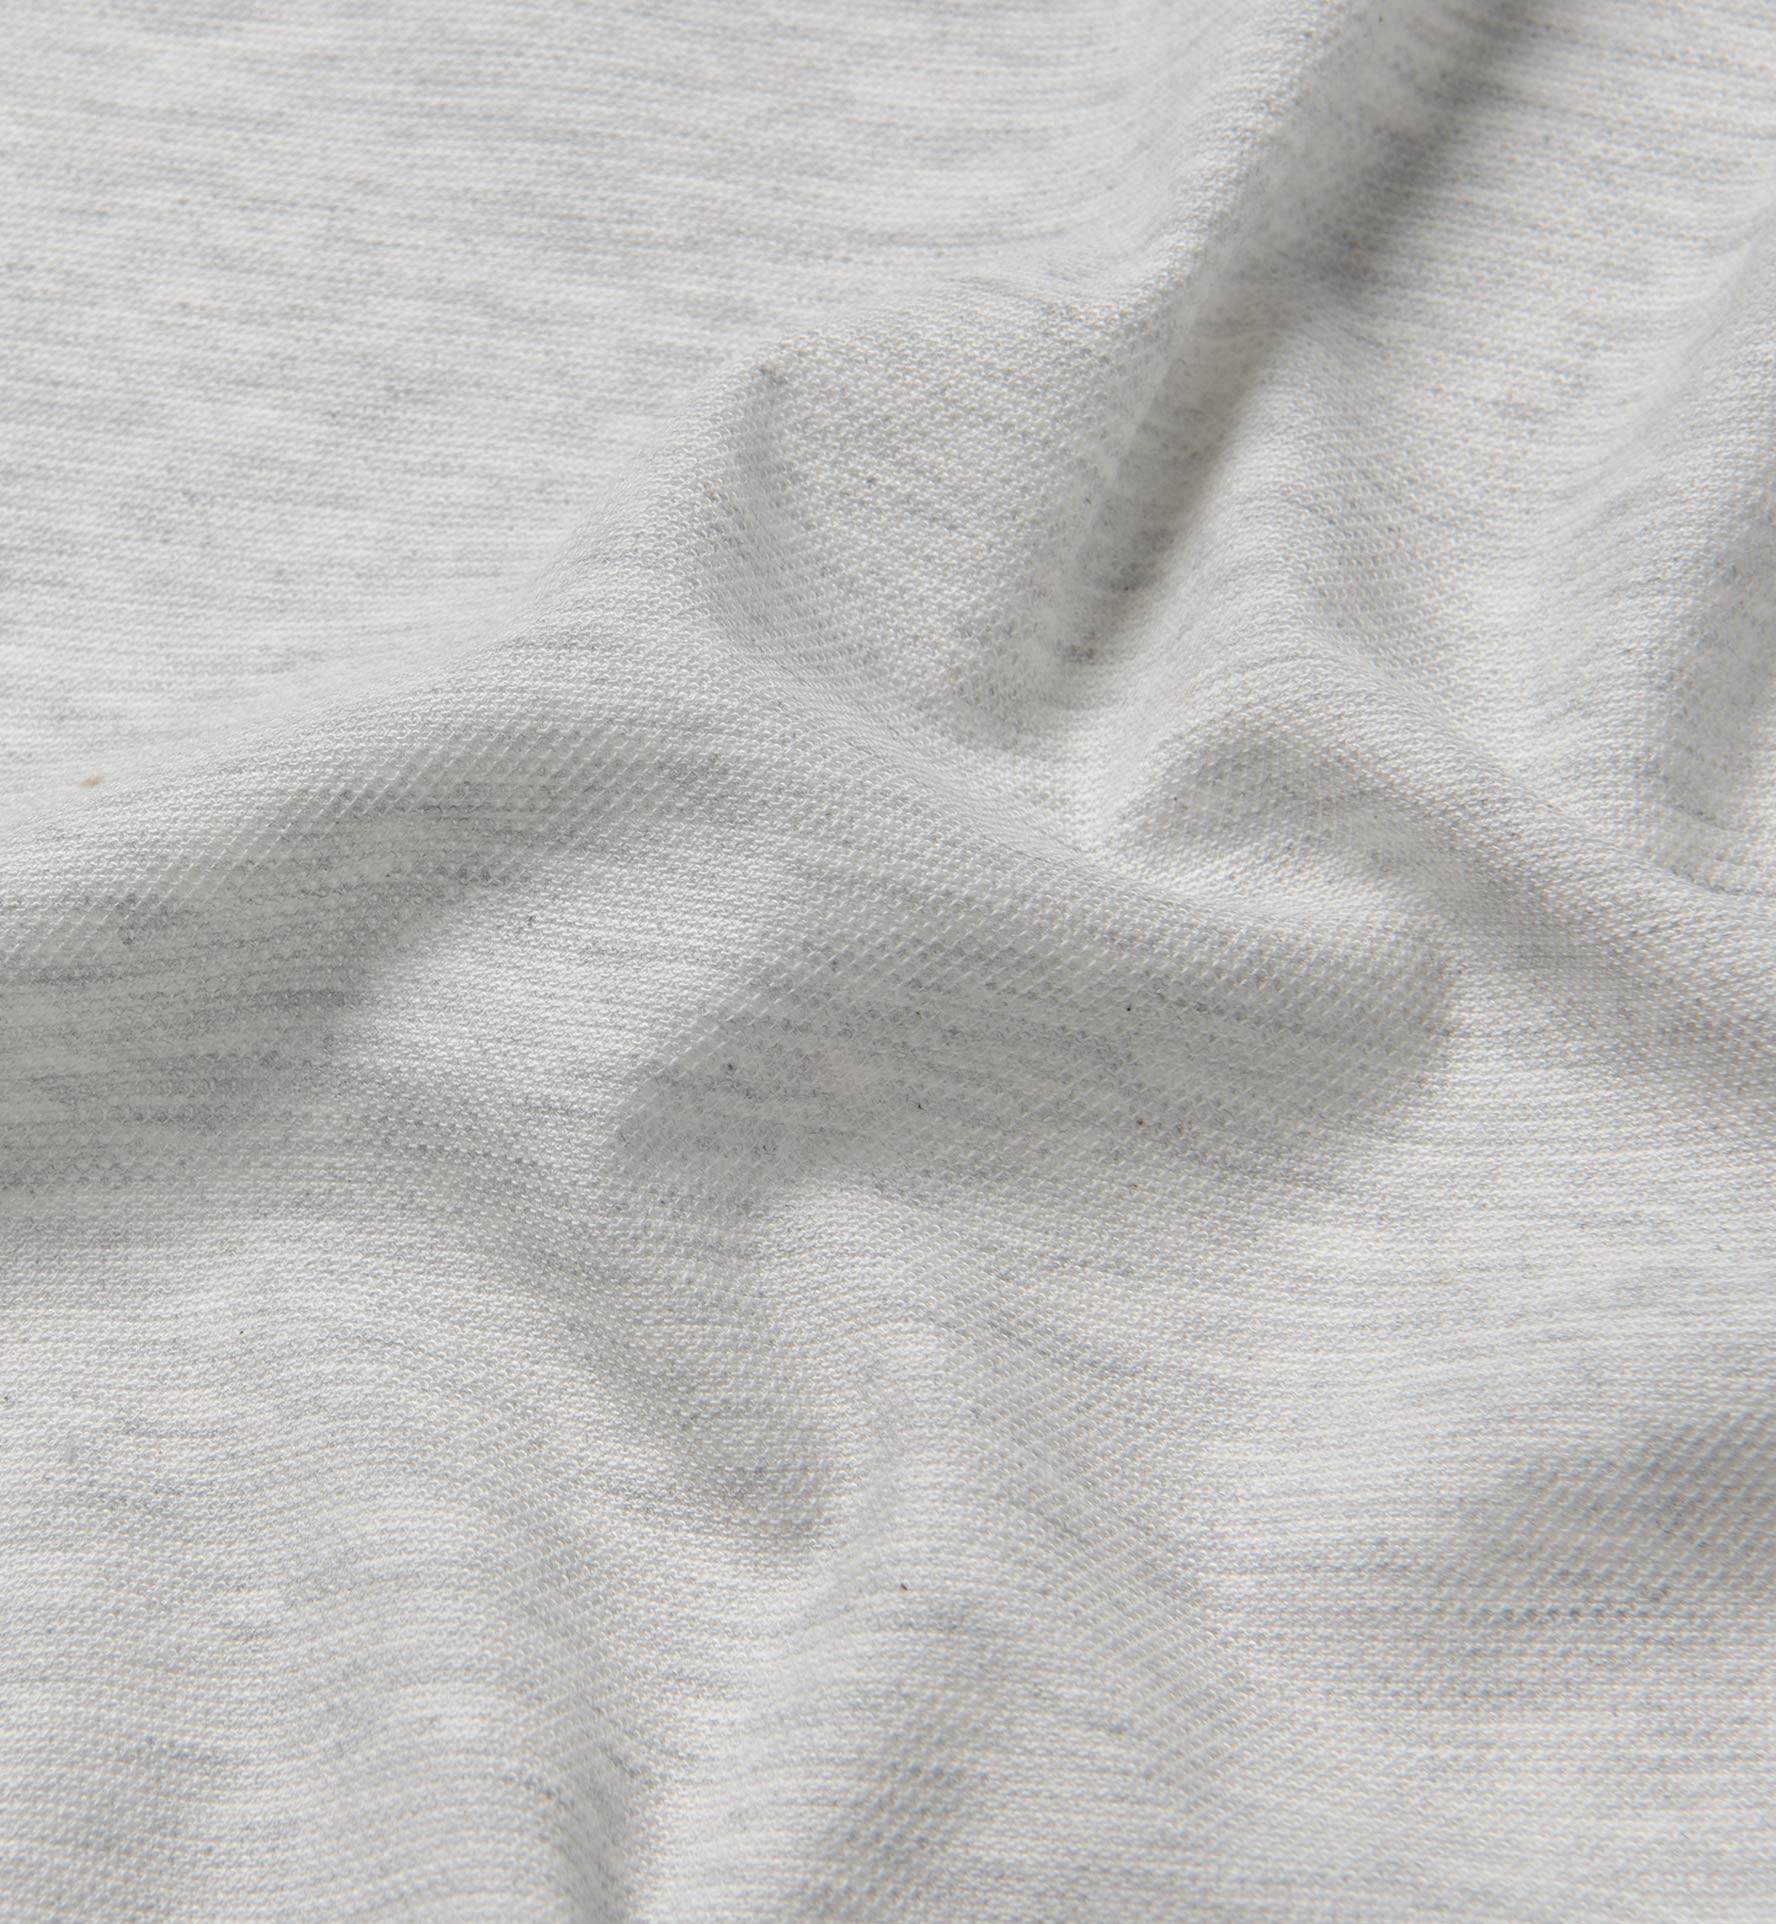 Ventura Light Grey Melange Knit Pique Shirts by Proper Cloth